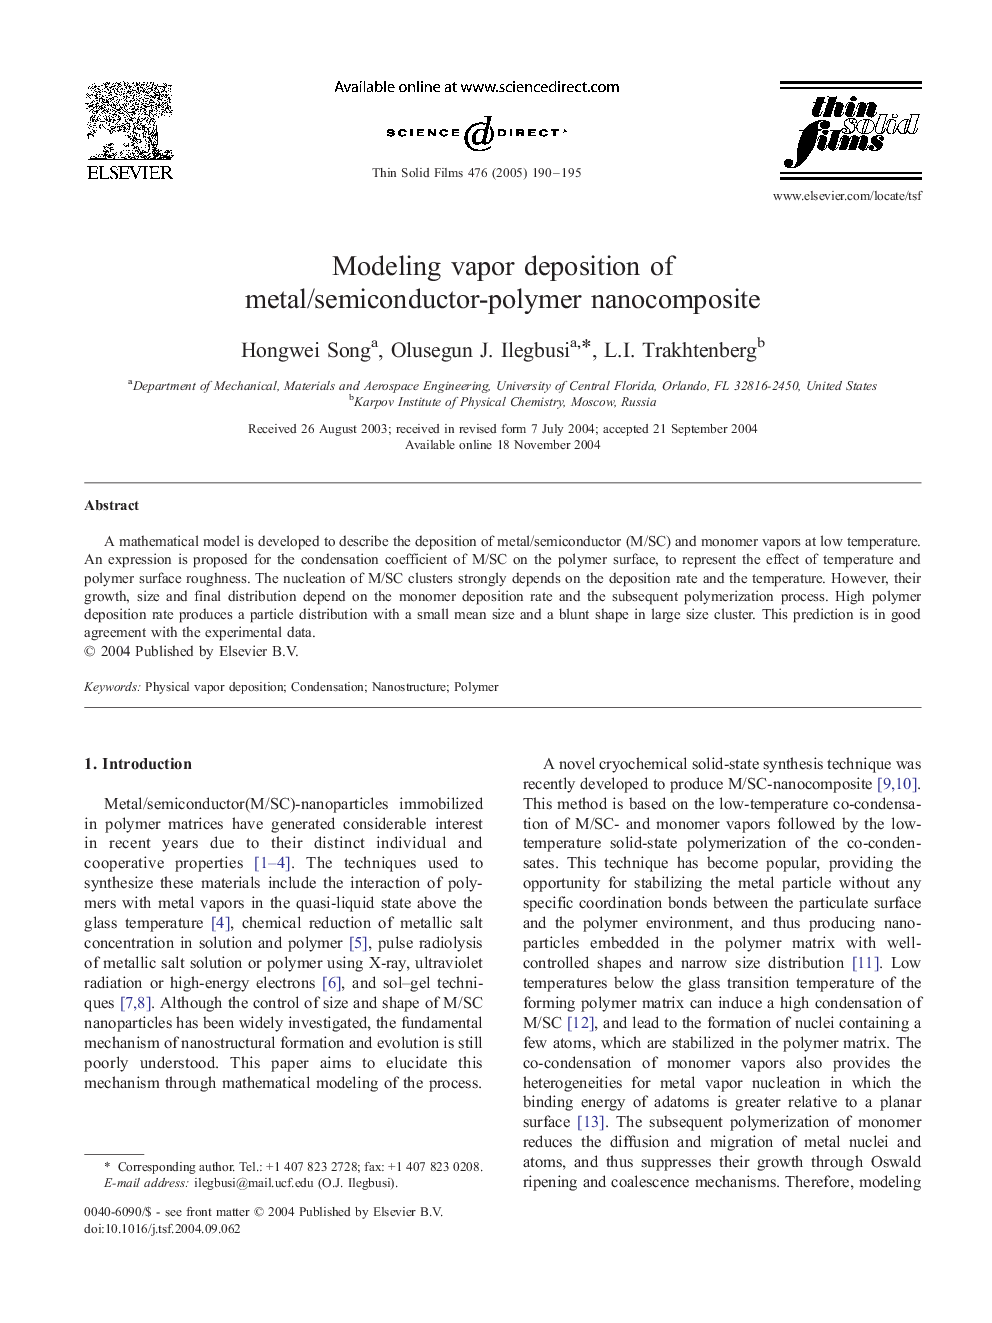 Modeling vapor deposition of metal/semiconductor-polymer nanocomposite